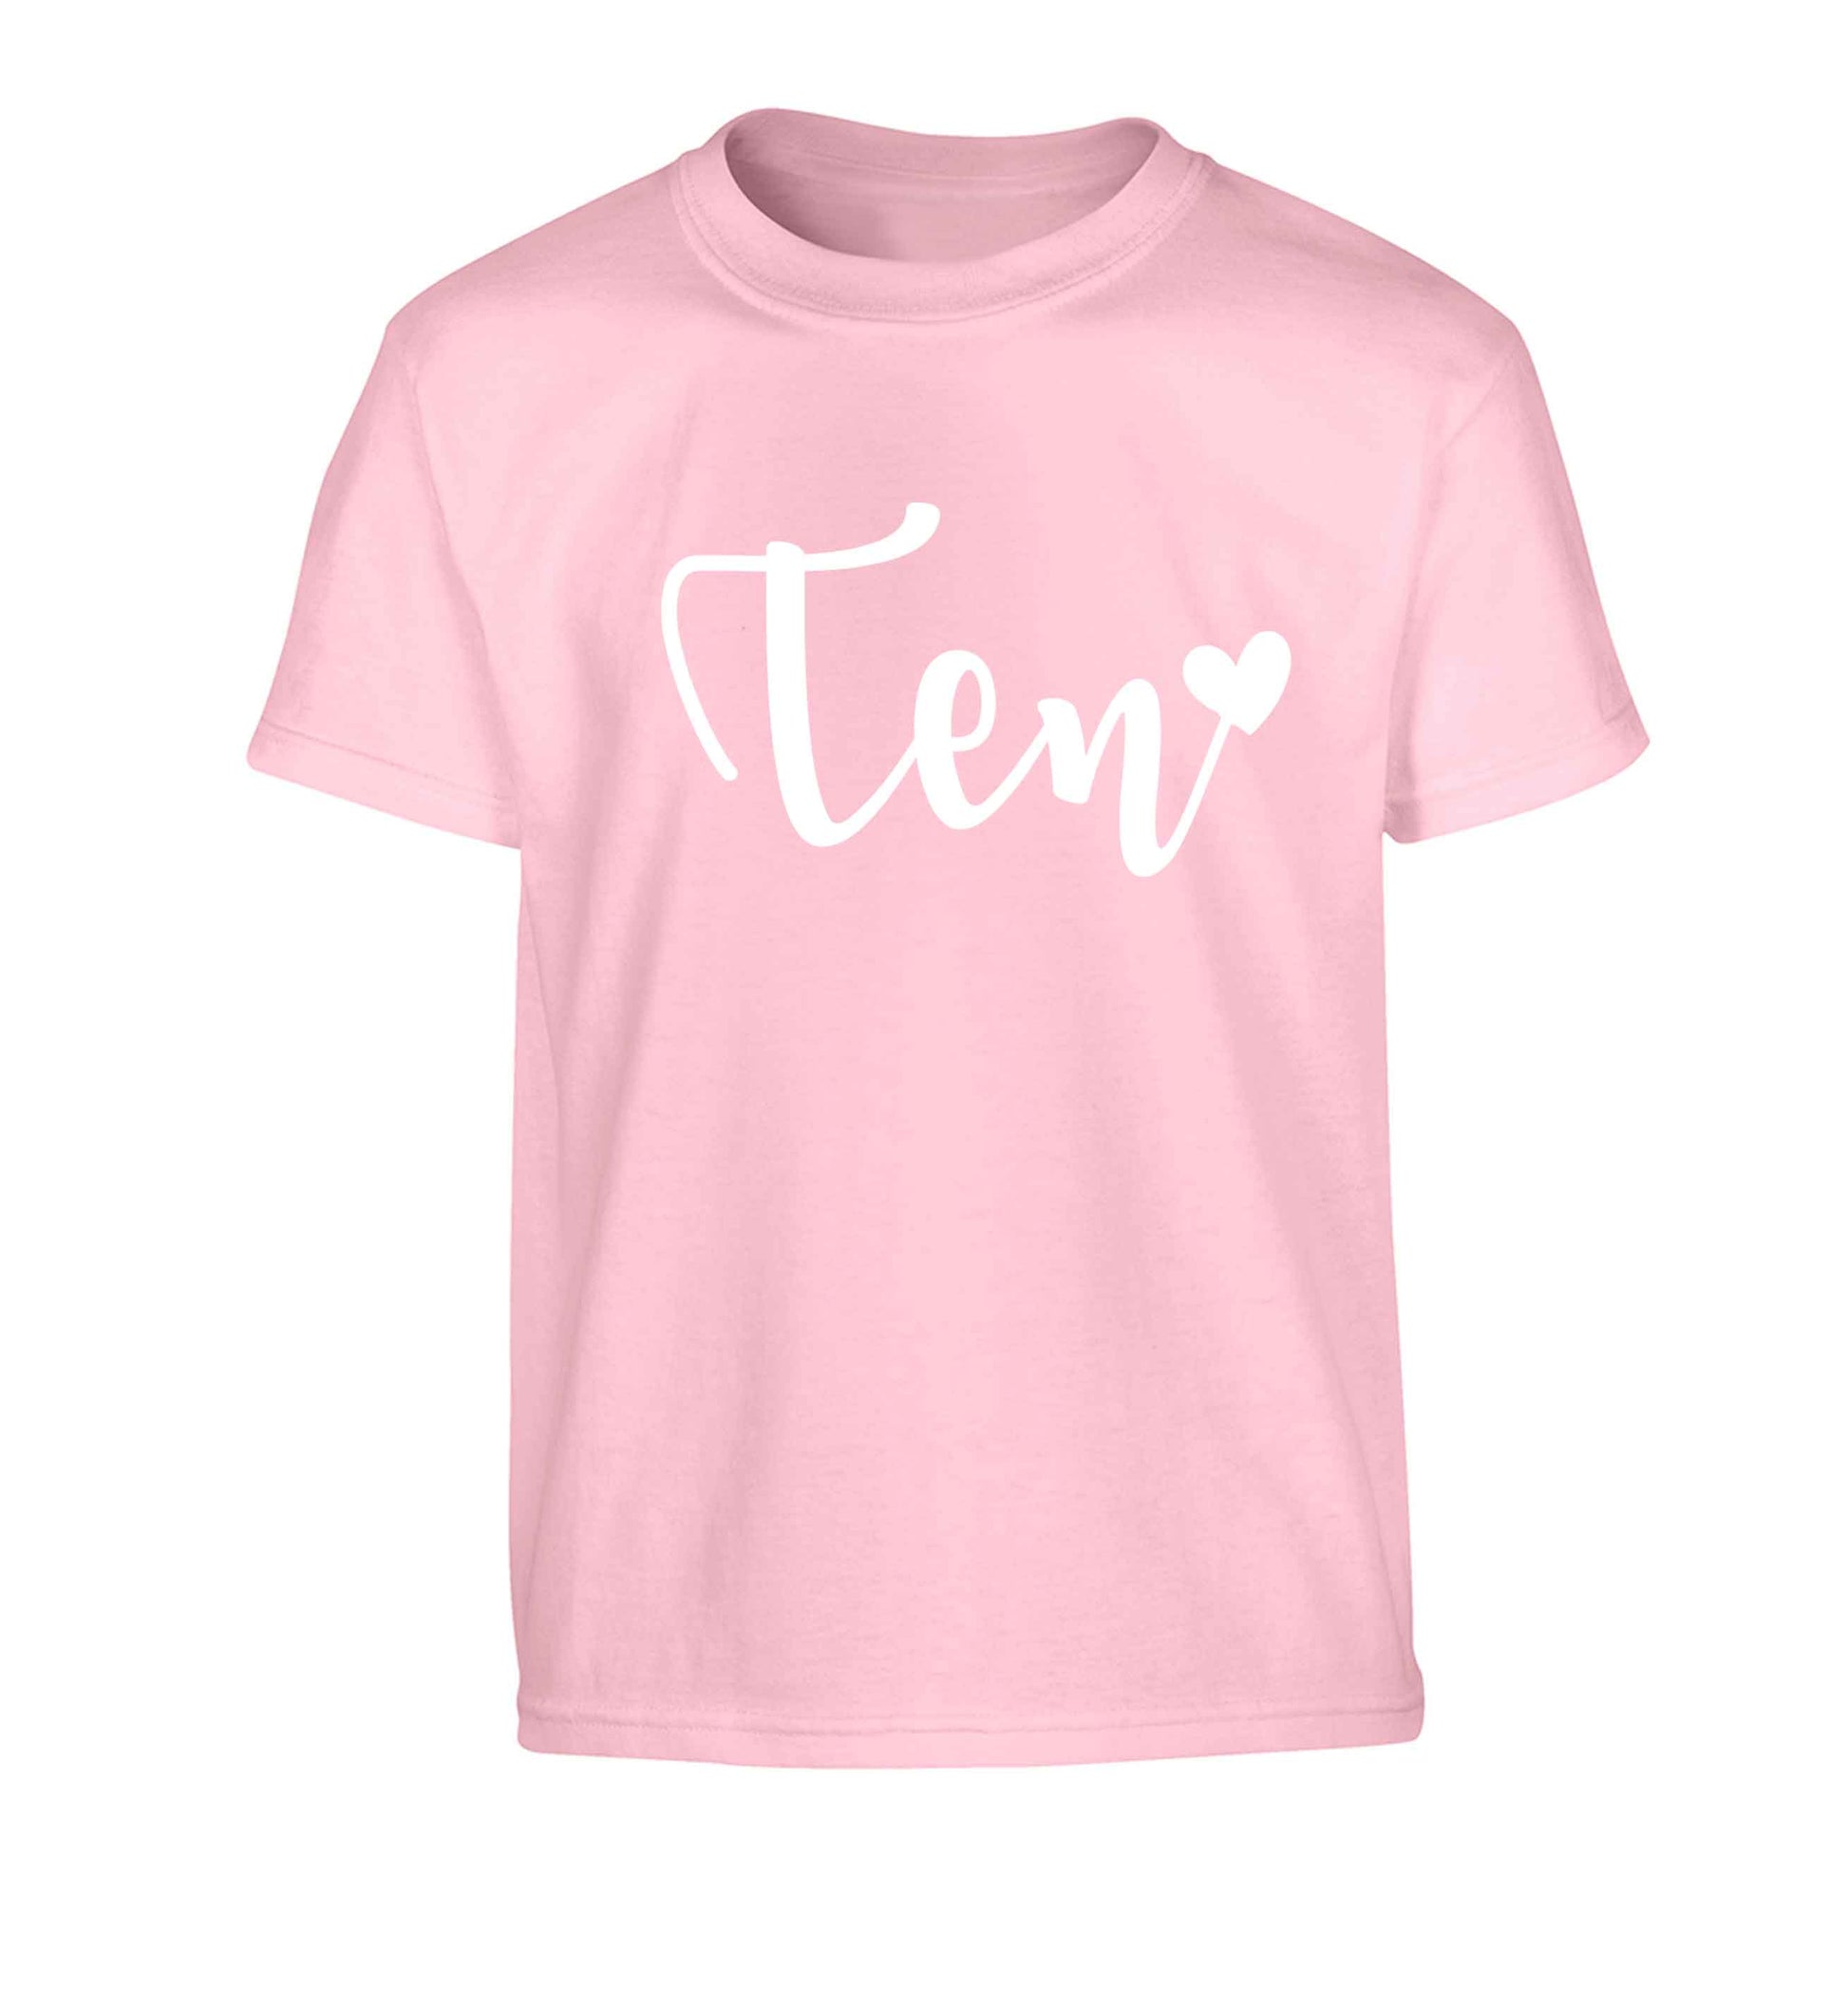 Ten and heart Children's light pink Tshirt 12-13 Years